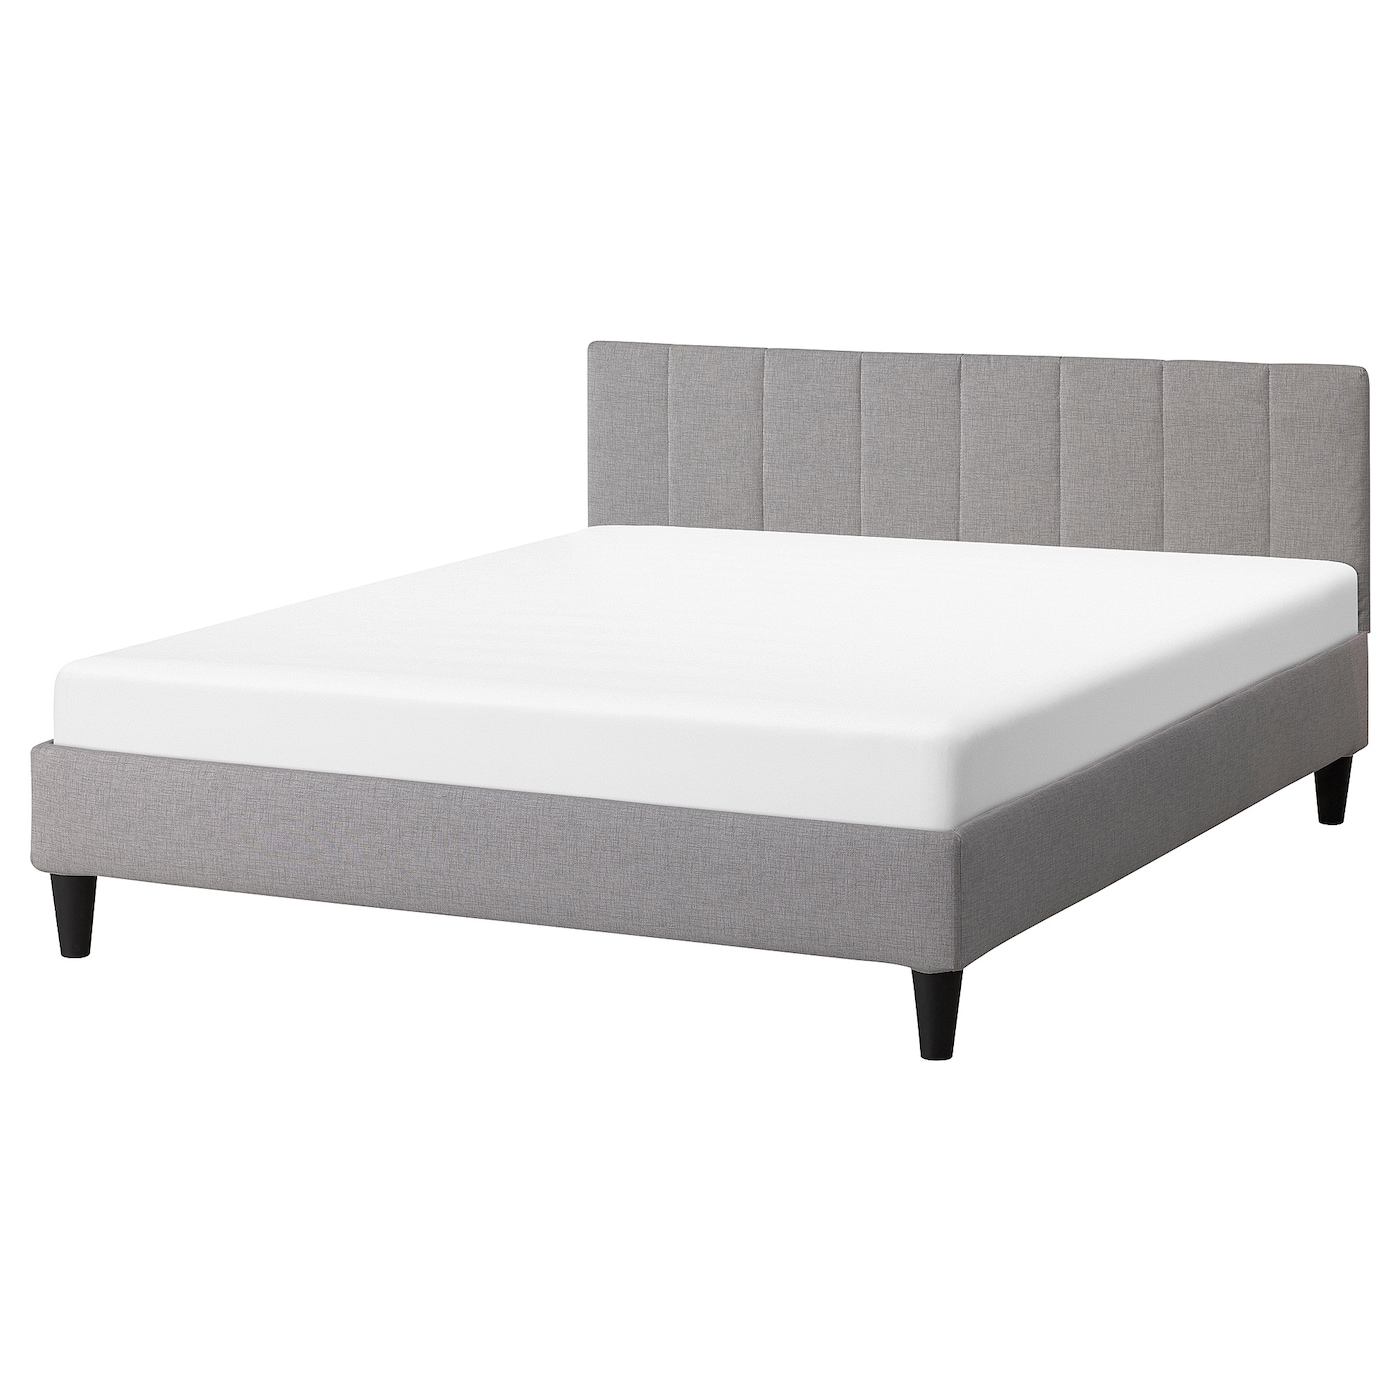 Каркас кровати с мягкой обивкой - IKEA FALUDDEN, 200х160 см, серый, ФАЛЮДДЕН ИКЕА